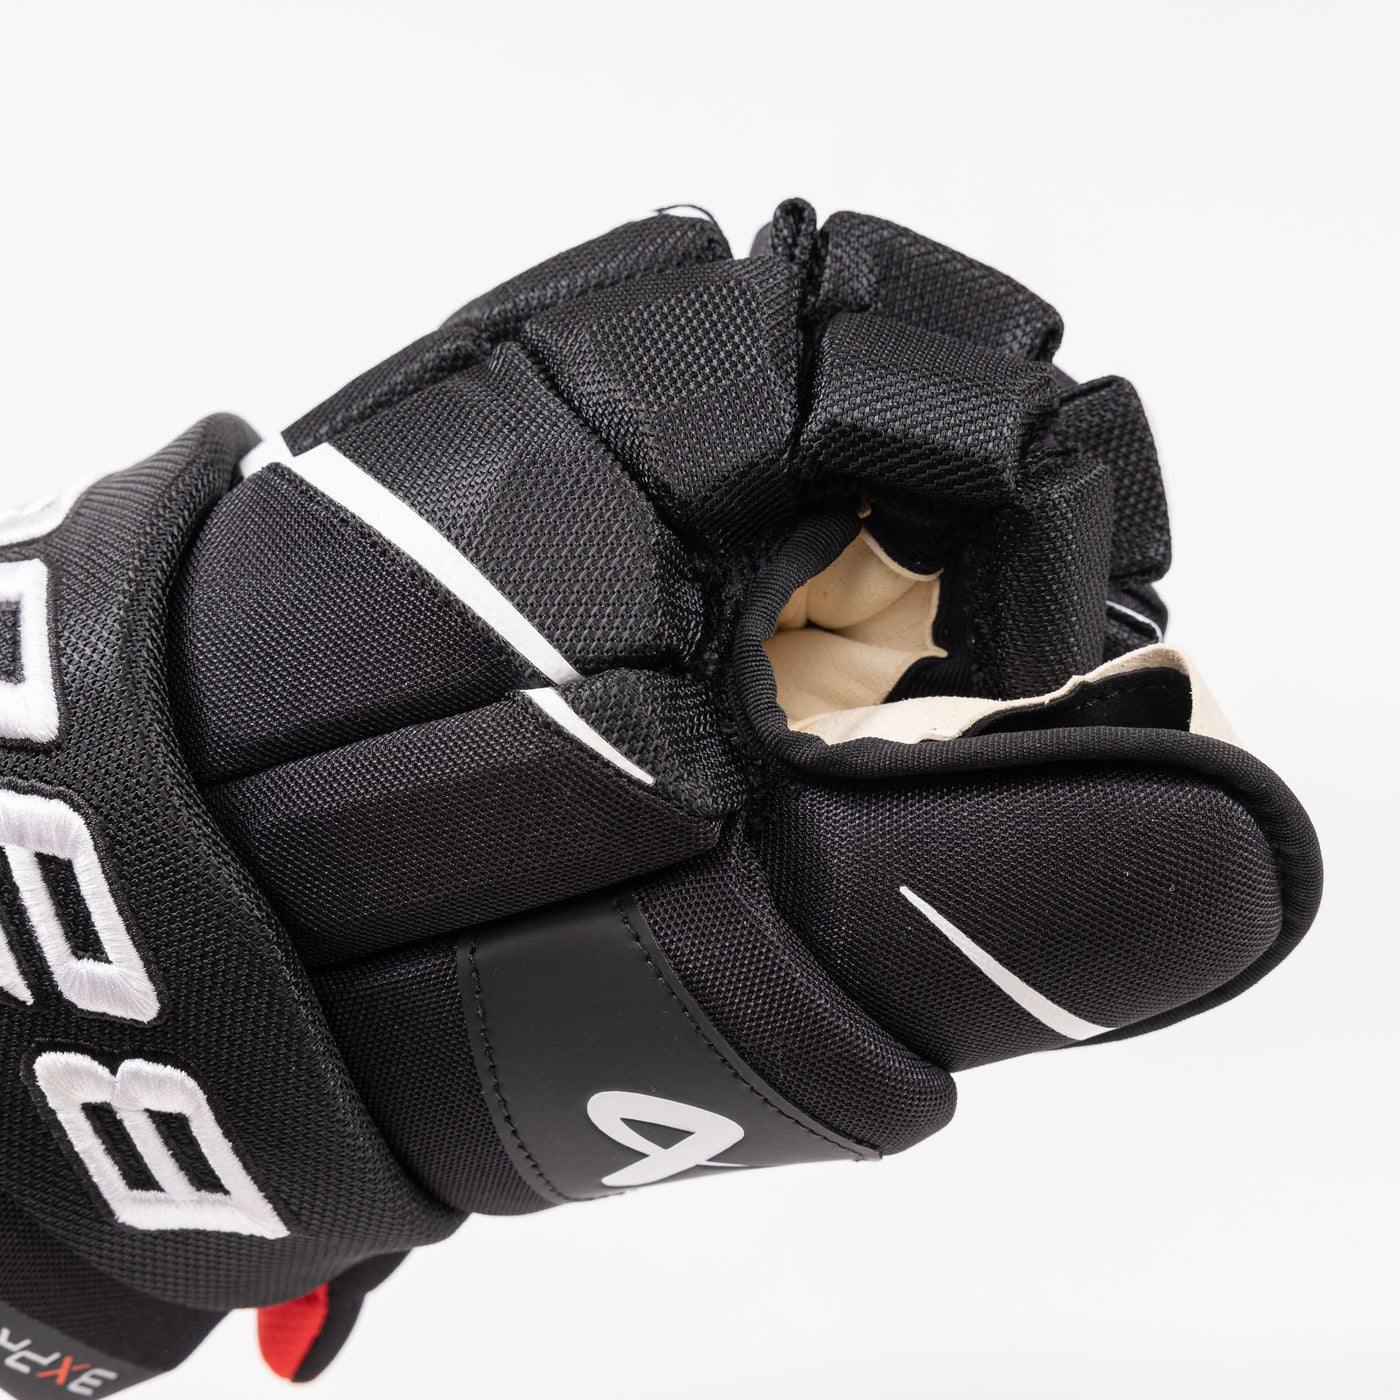 Bauer Vapor 3X Pro Intermediate Hockey Gloves - The Hockey Shop Source For Sports